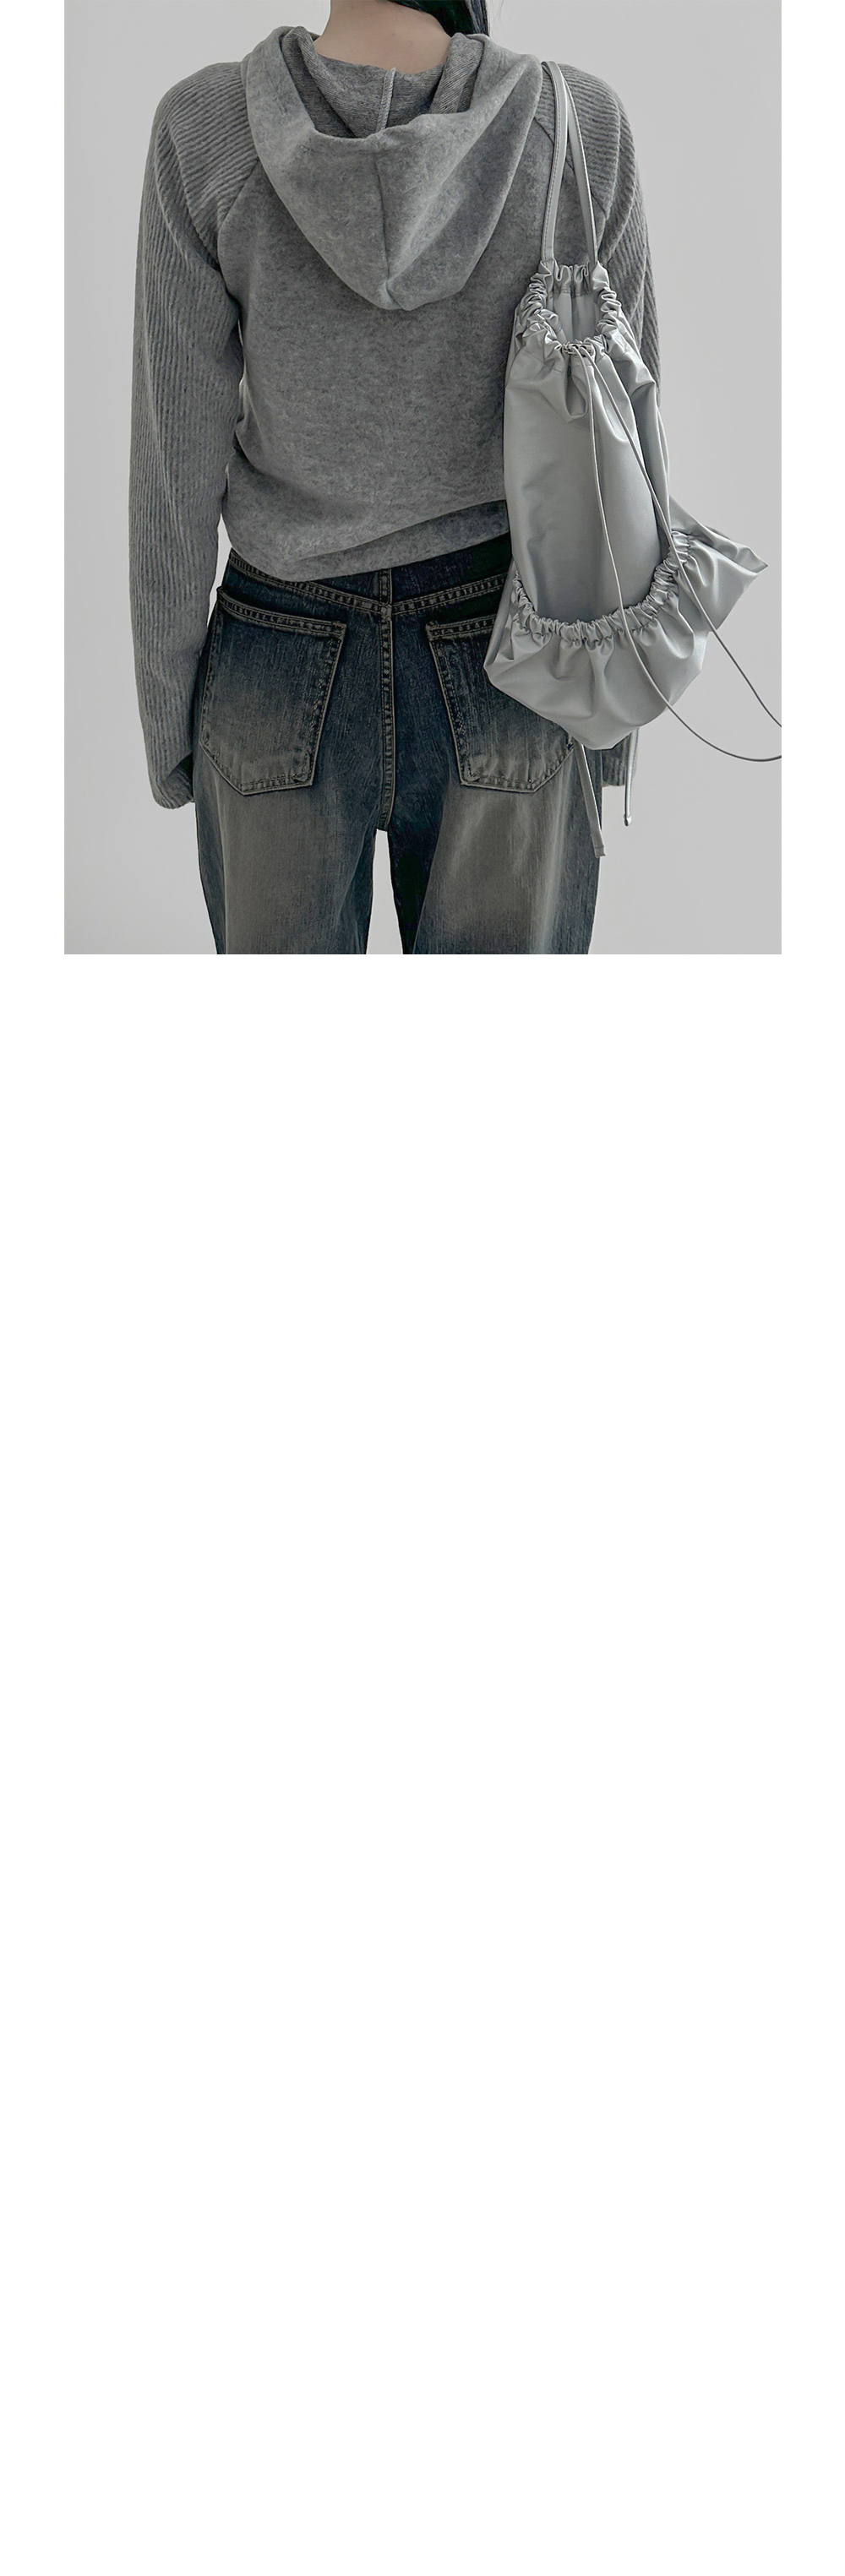 suspenders skirt/pants model image-S1L9